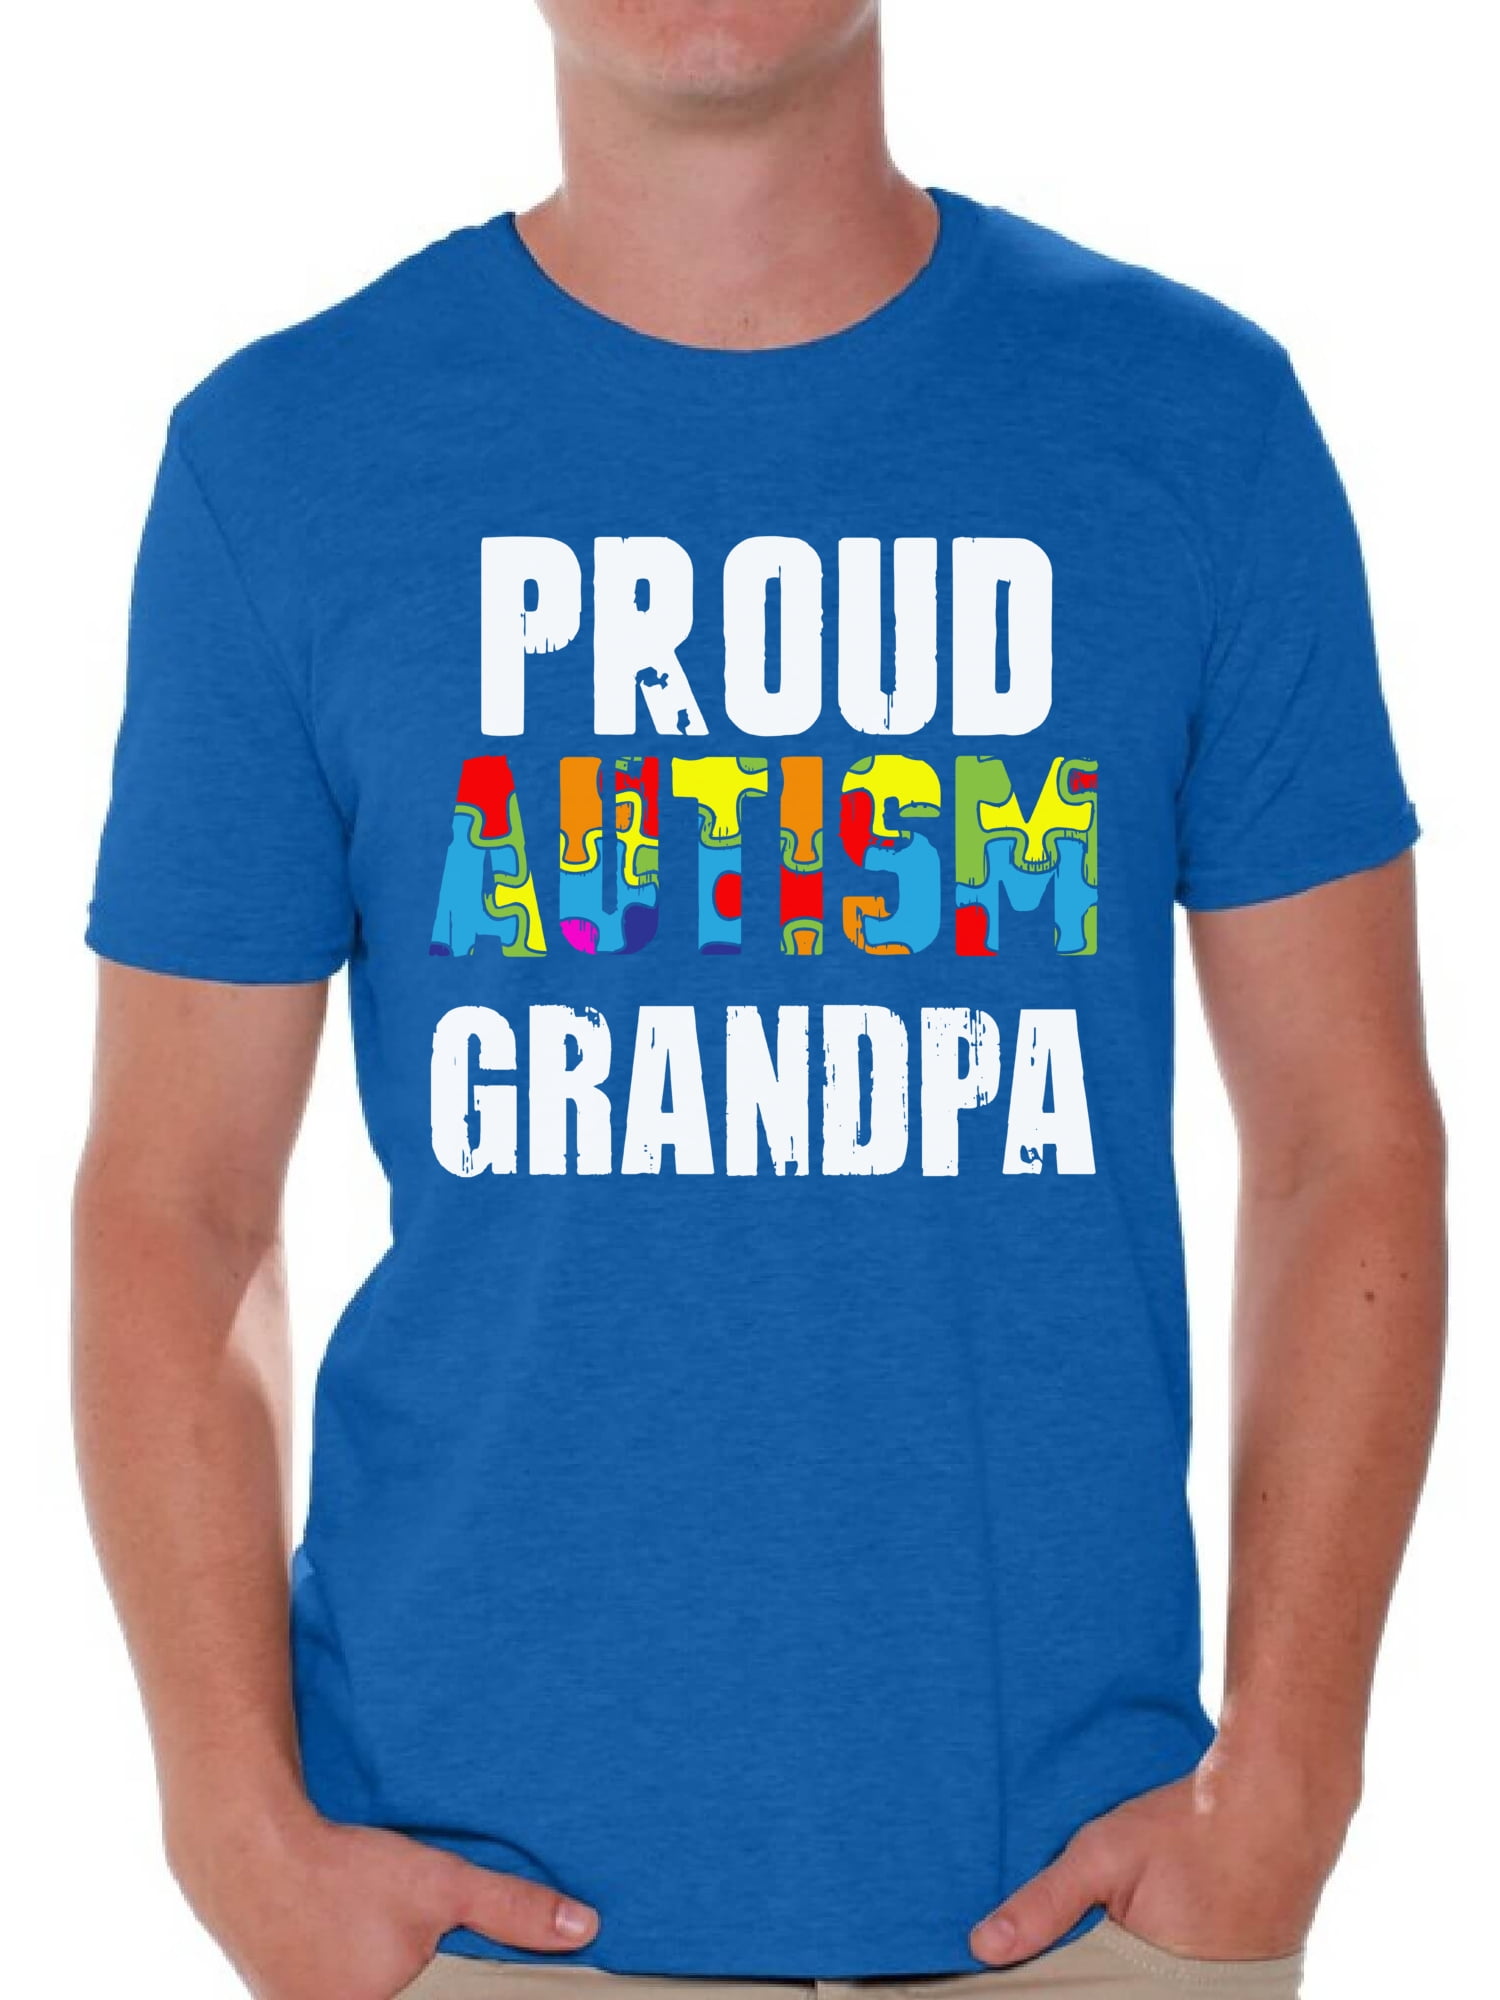 Autism Dad T-shirt Autism Awareness Autistic Super Dad Birthday Gift Adult Top